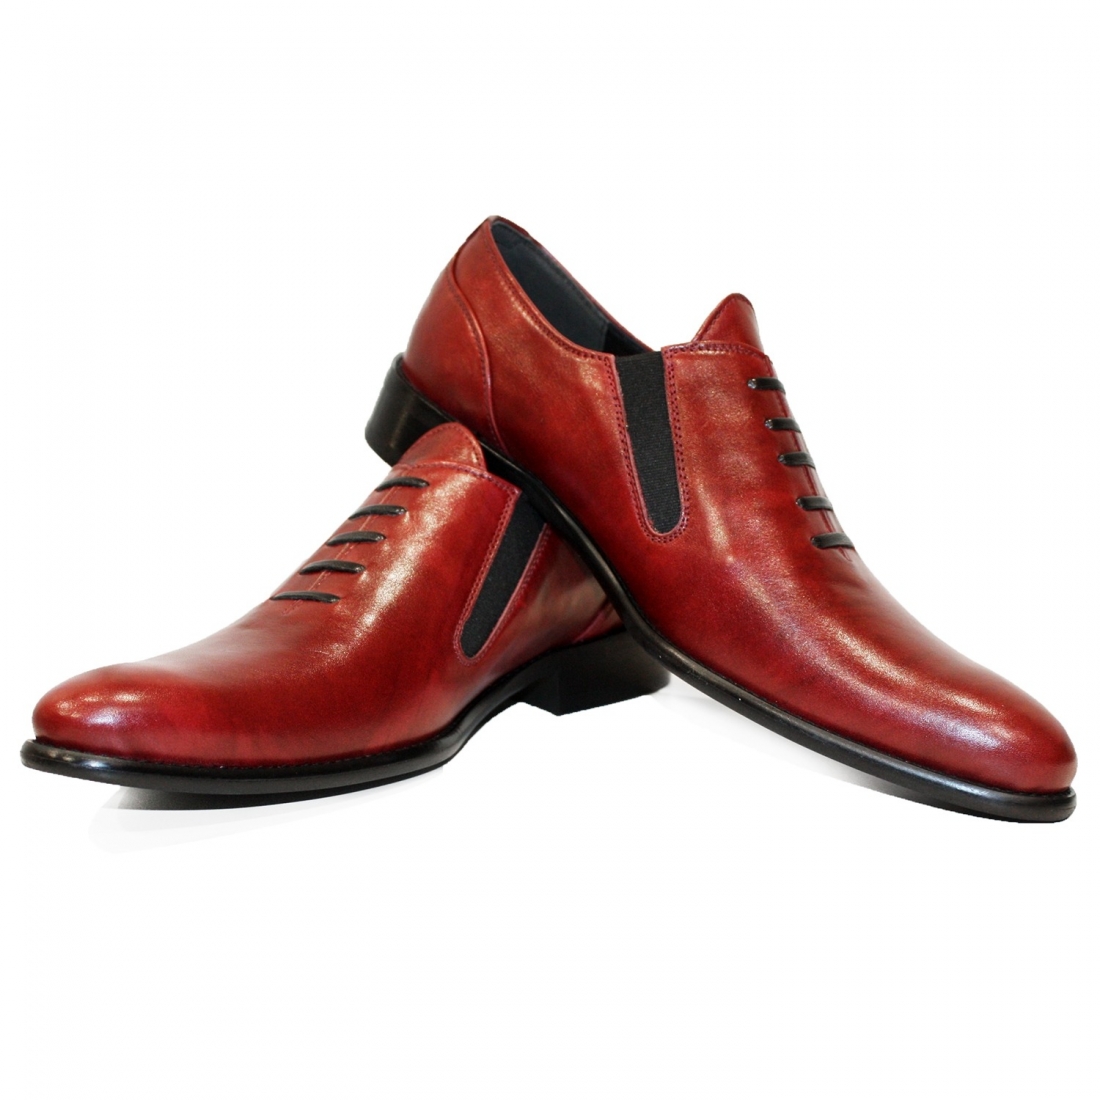 Modello Rabetto - Slipper - Handmade Colorful Italian Leather Shoes